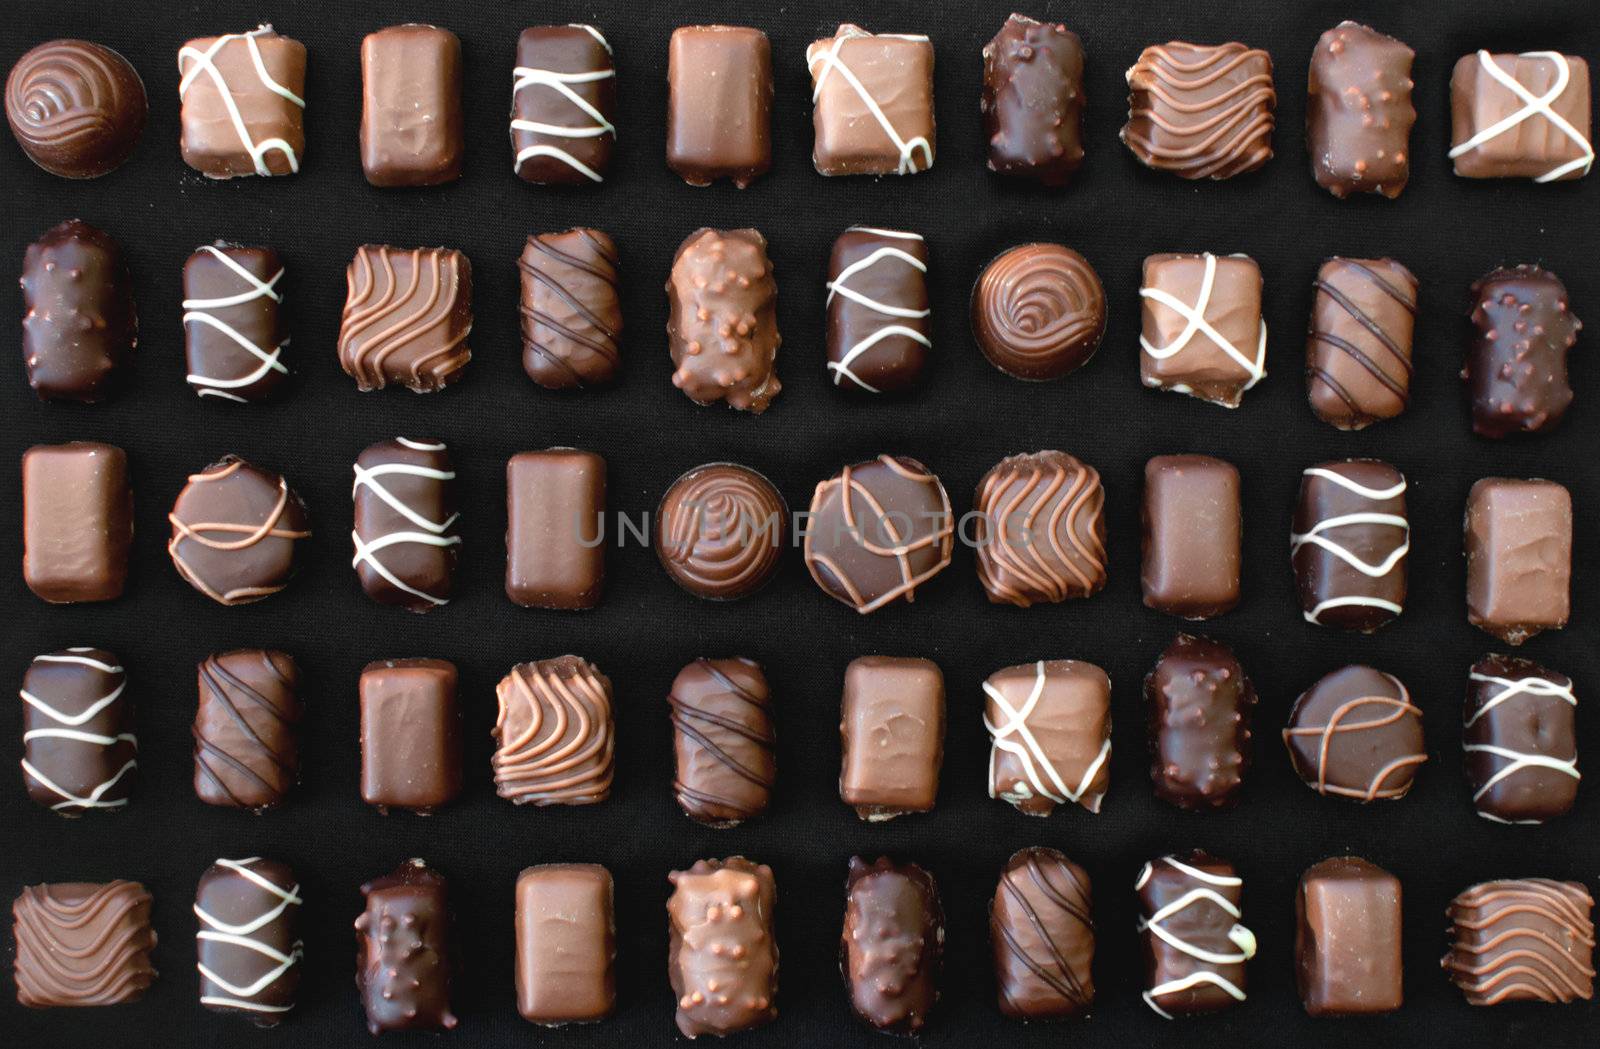 Chocolate candy selection on display